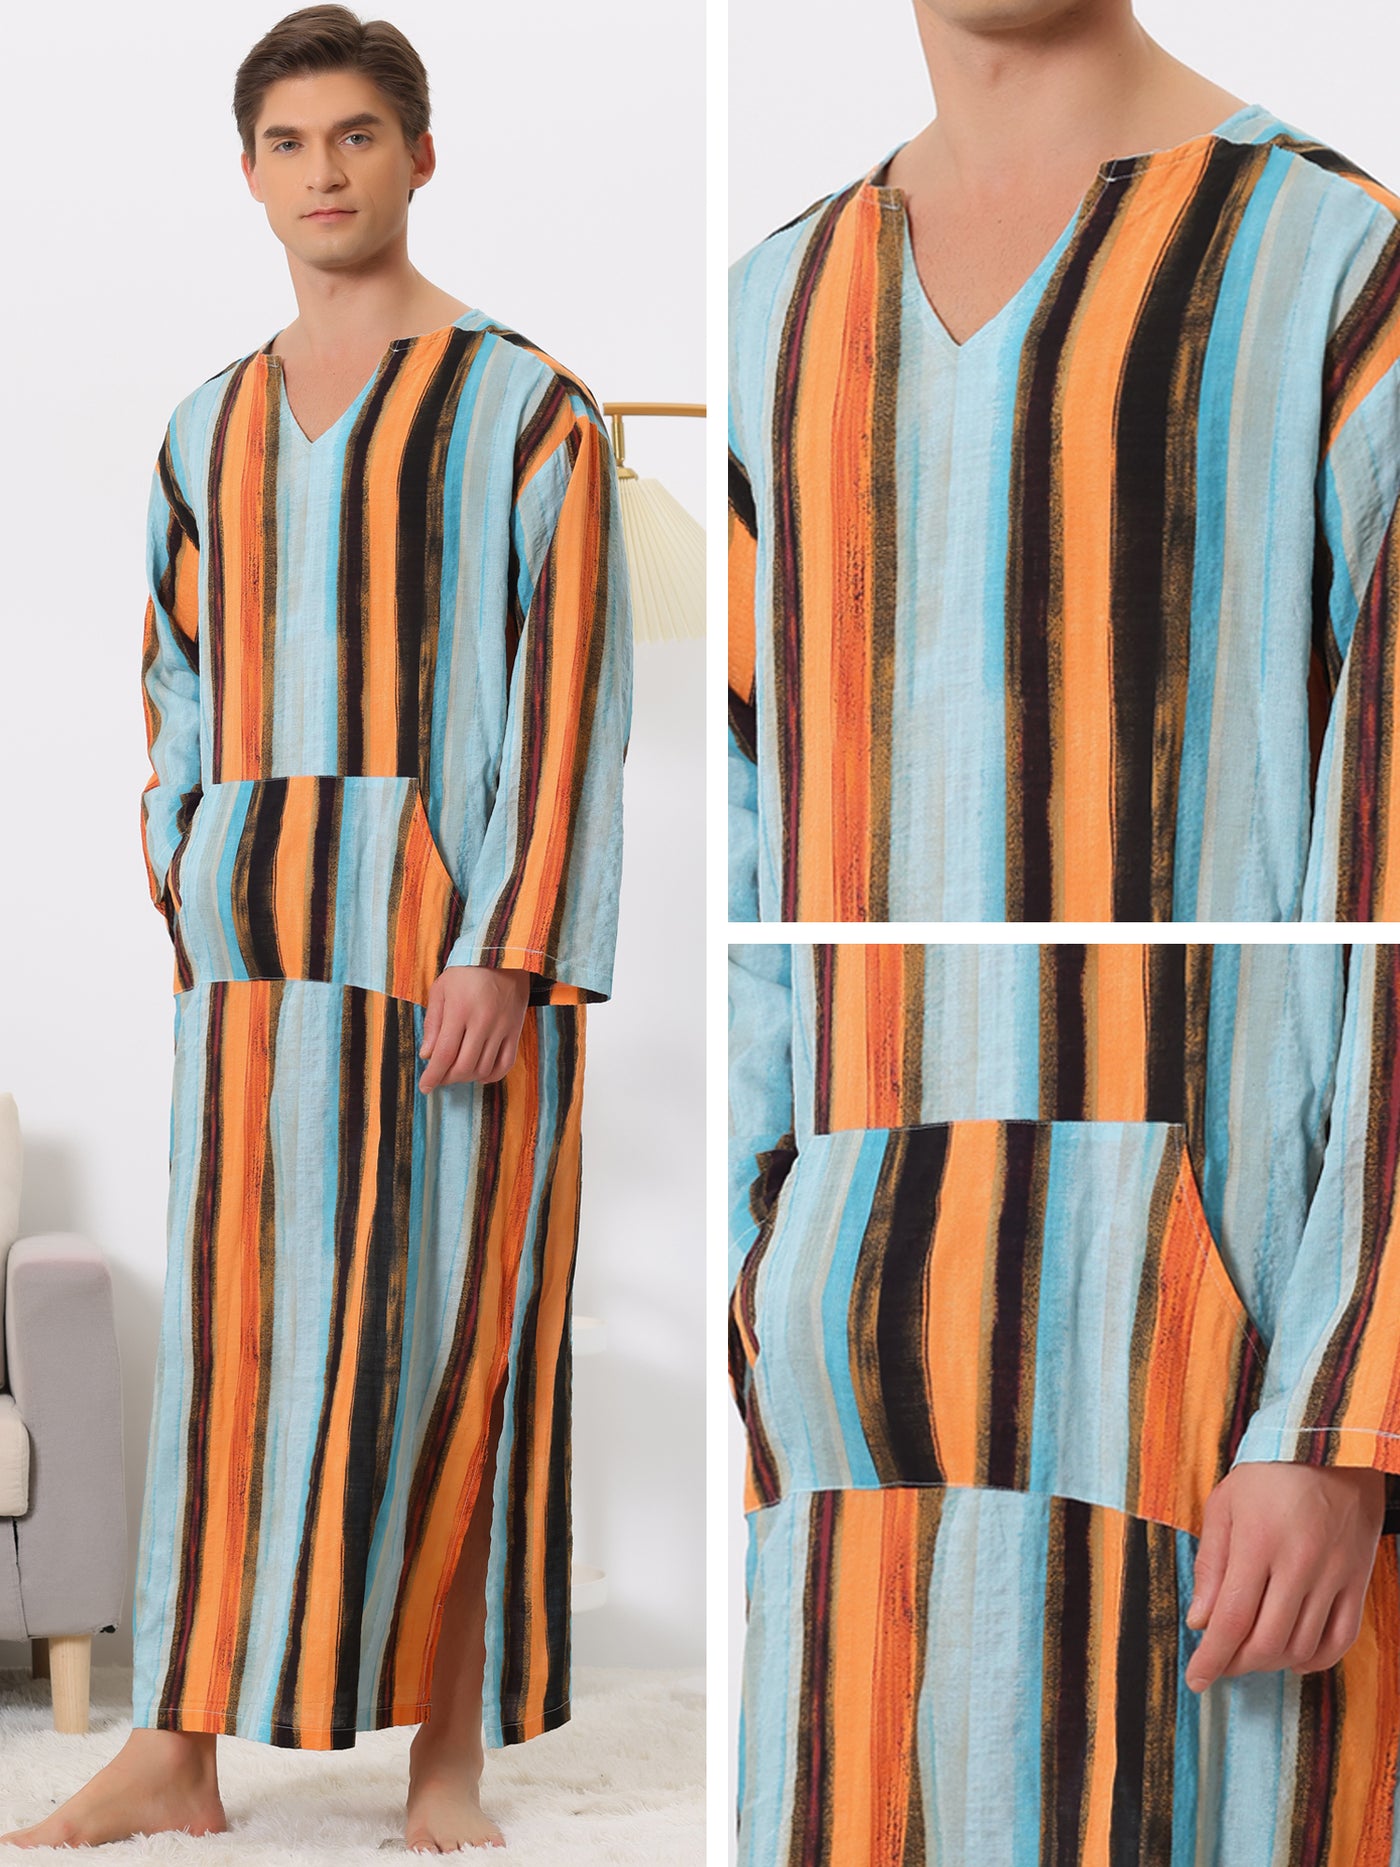 Bublédon Striped Nightshirts for Men's V Neck Long Sleeves Pajamas Shirts Nightwear